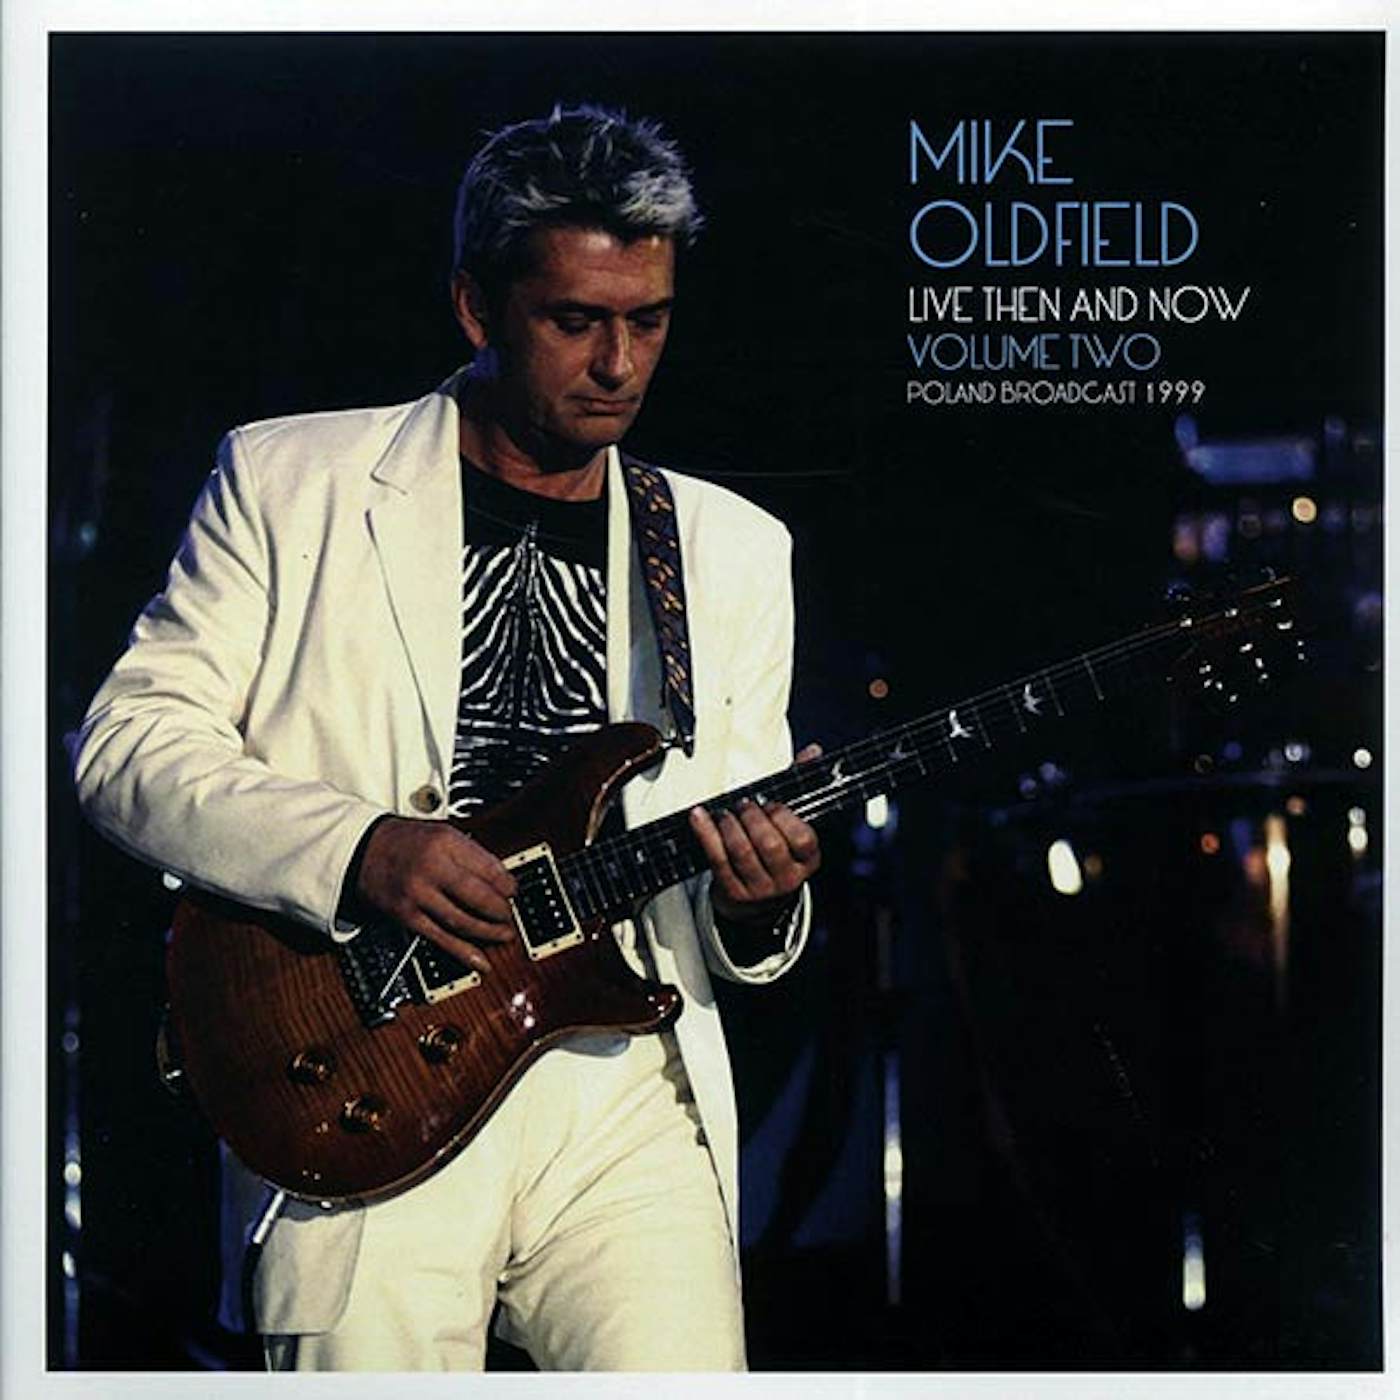 Mike Oldfield  LP -  Live Then & Now Volume 2: Poland Broadcast 1999 (ltd. ed.) (2xLP) (Vinyl)